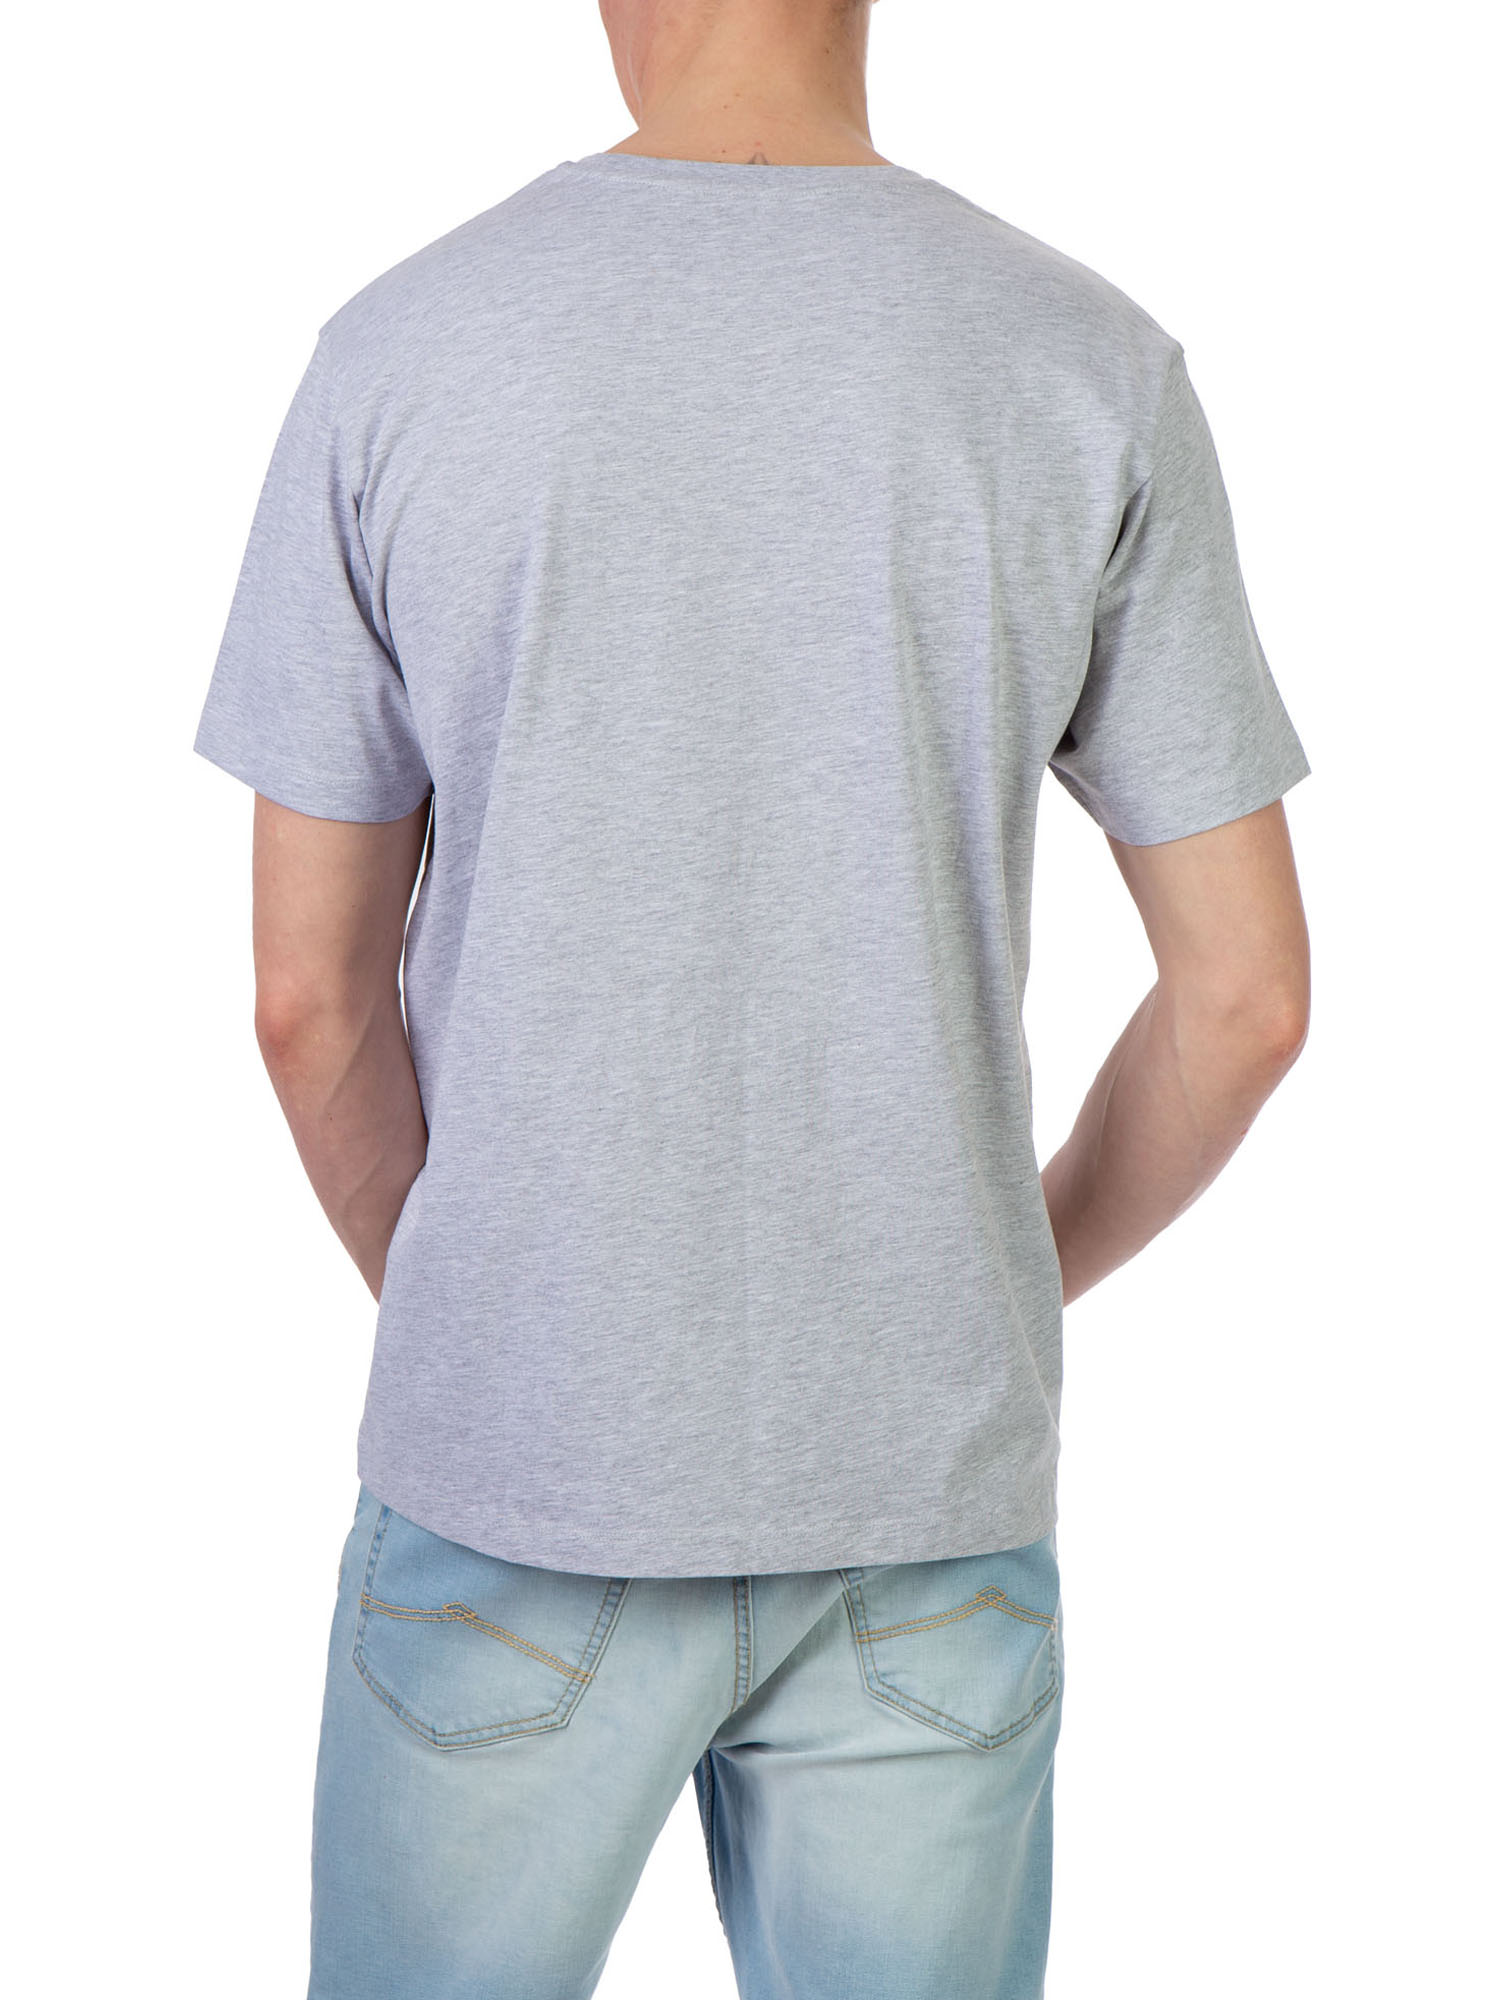 U.S. Polo Assn. Men's Short Sleeve Graphic Jersey T-Shirt - image 2 of 3